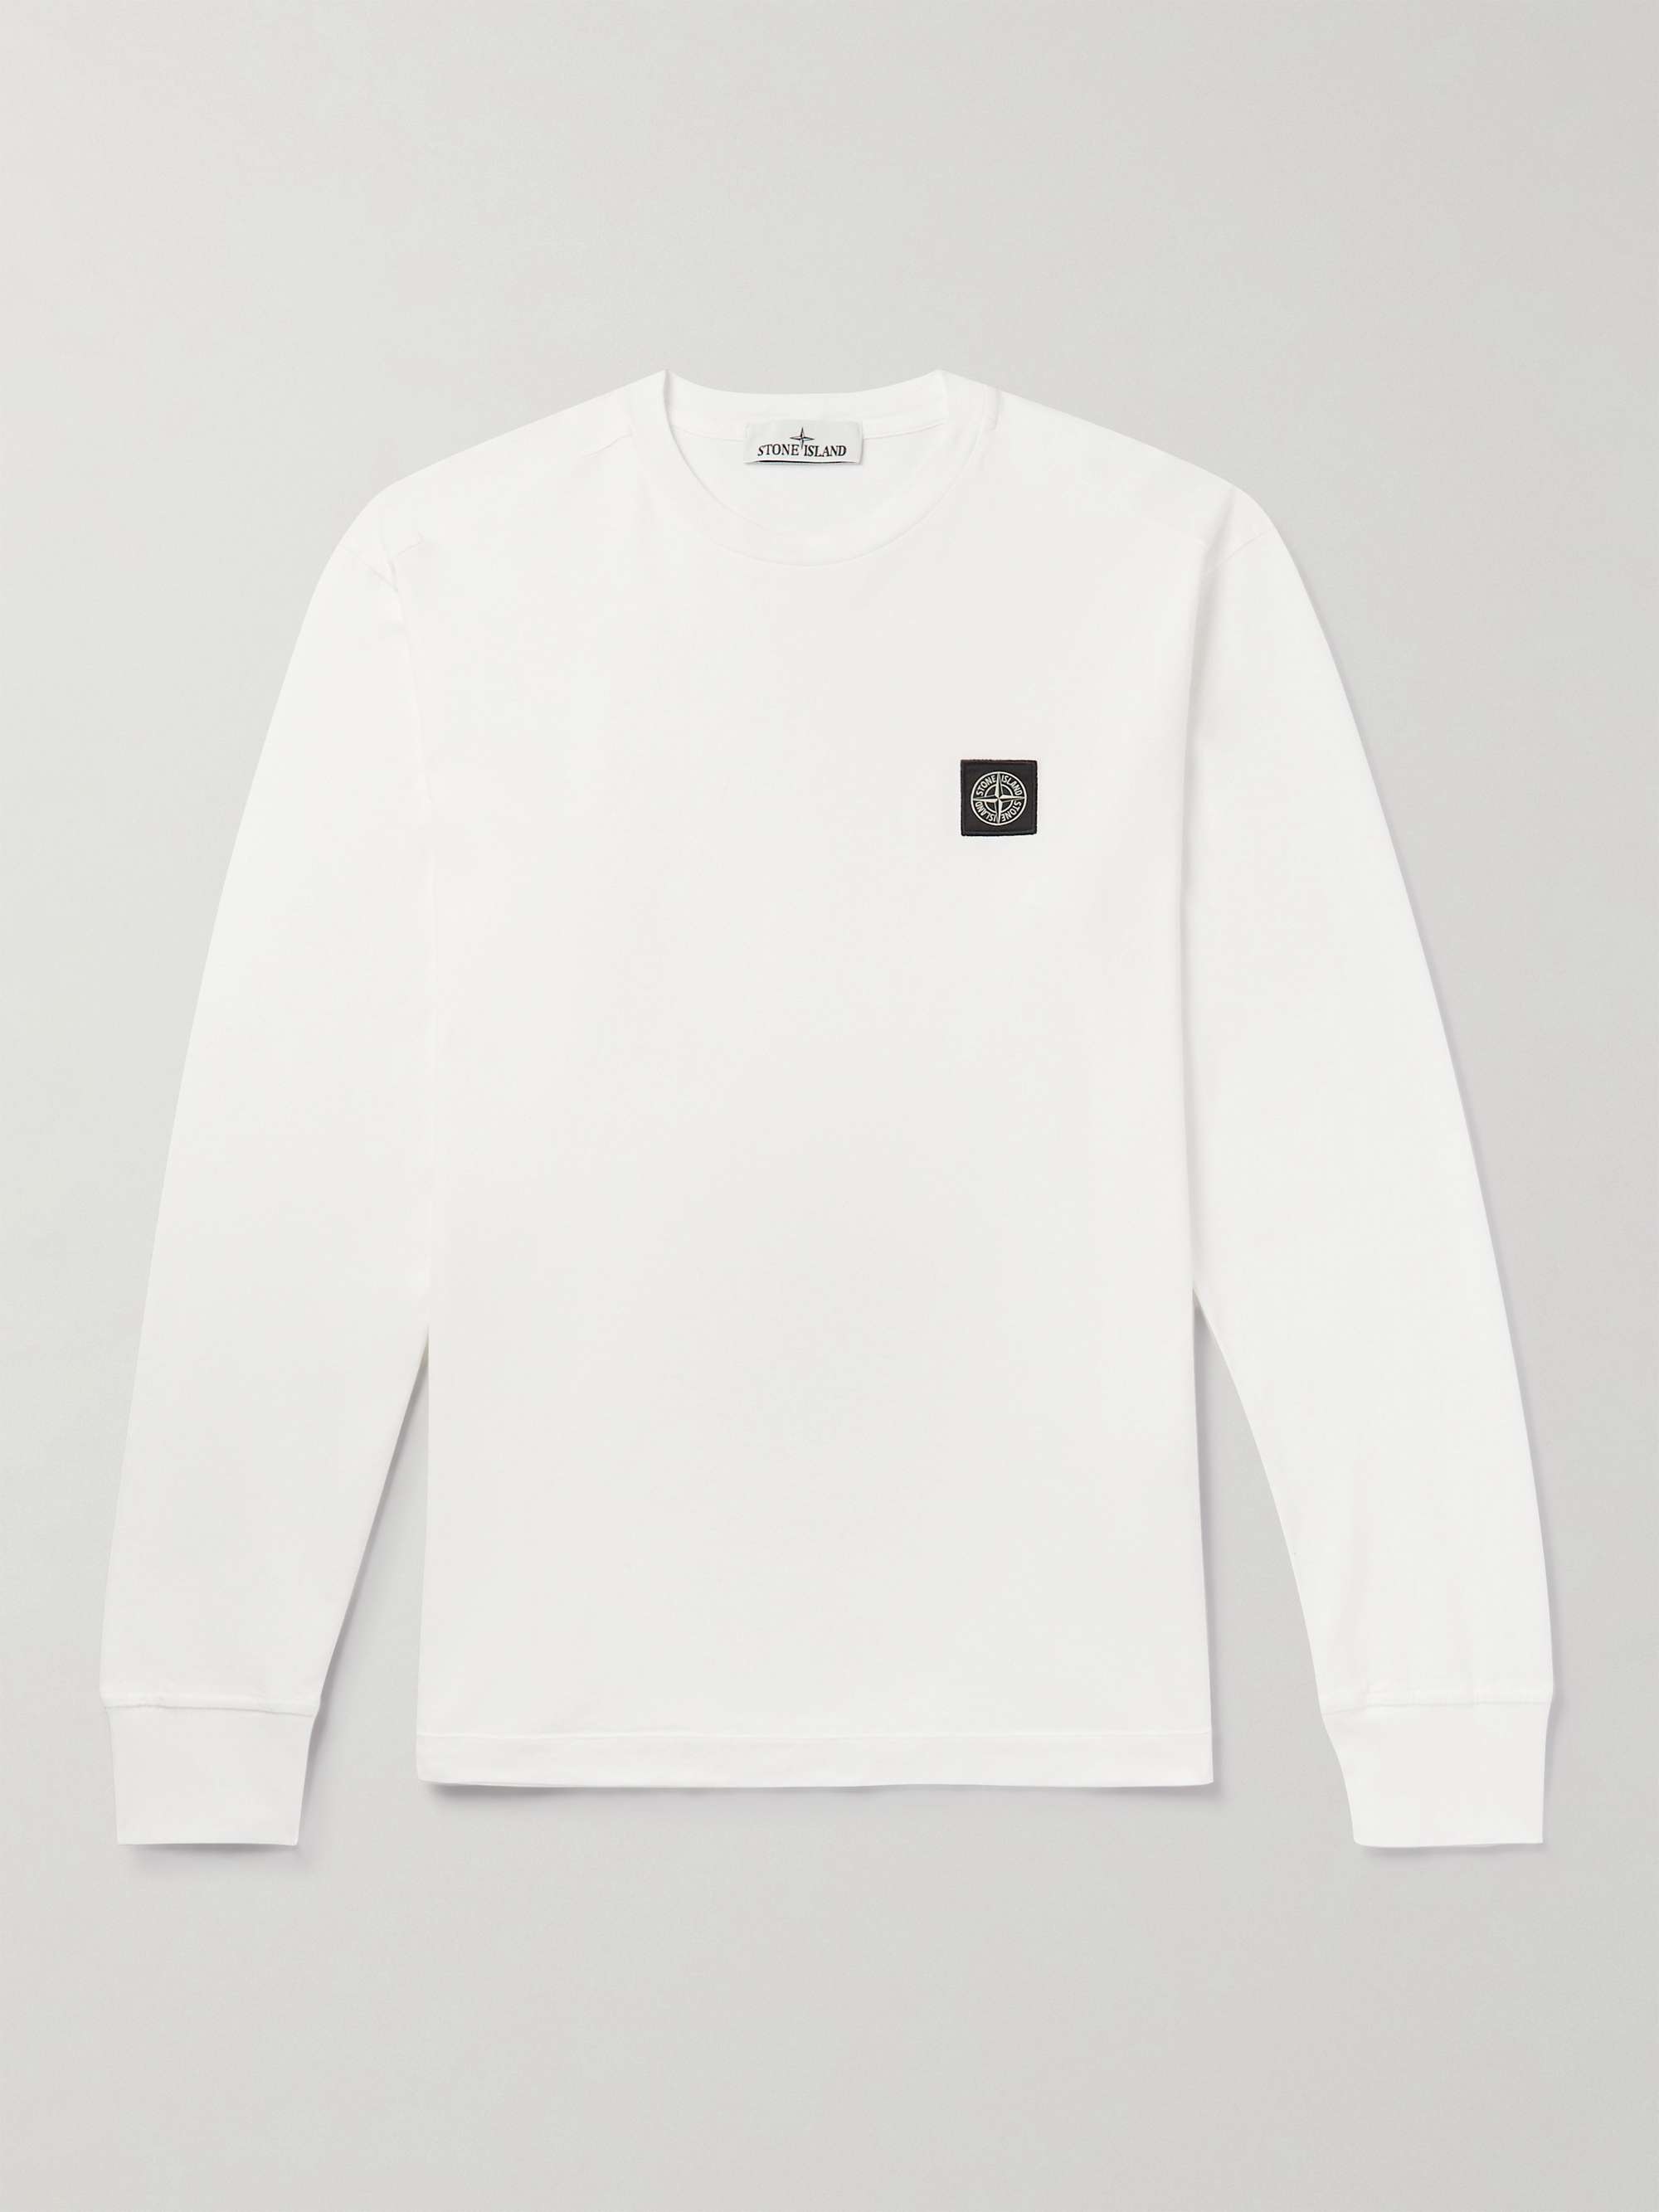 STONE ISLAND Logo-Appliqued Garment-Dyed Cotton-Jersey T-Shirt,White